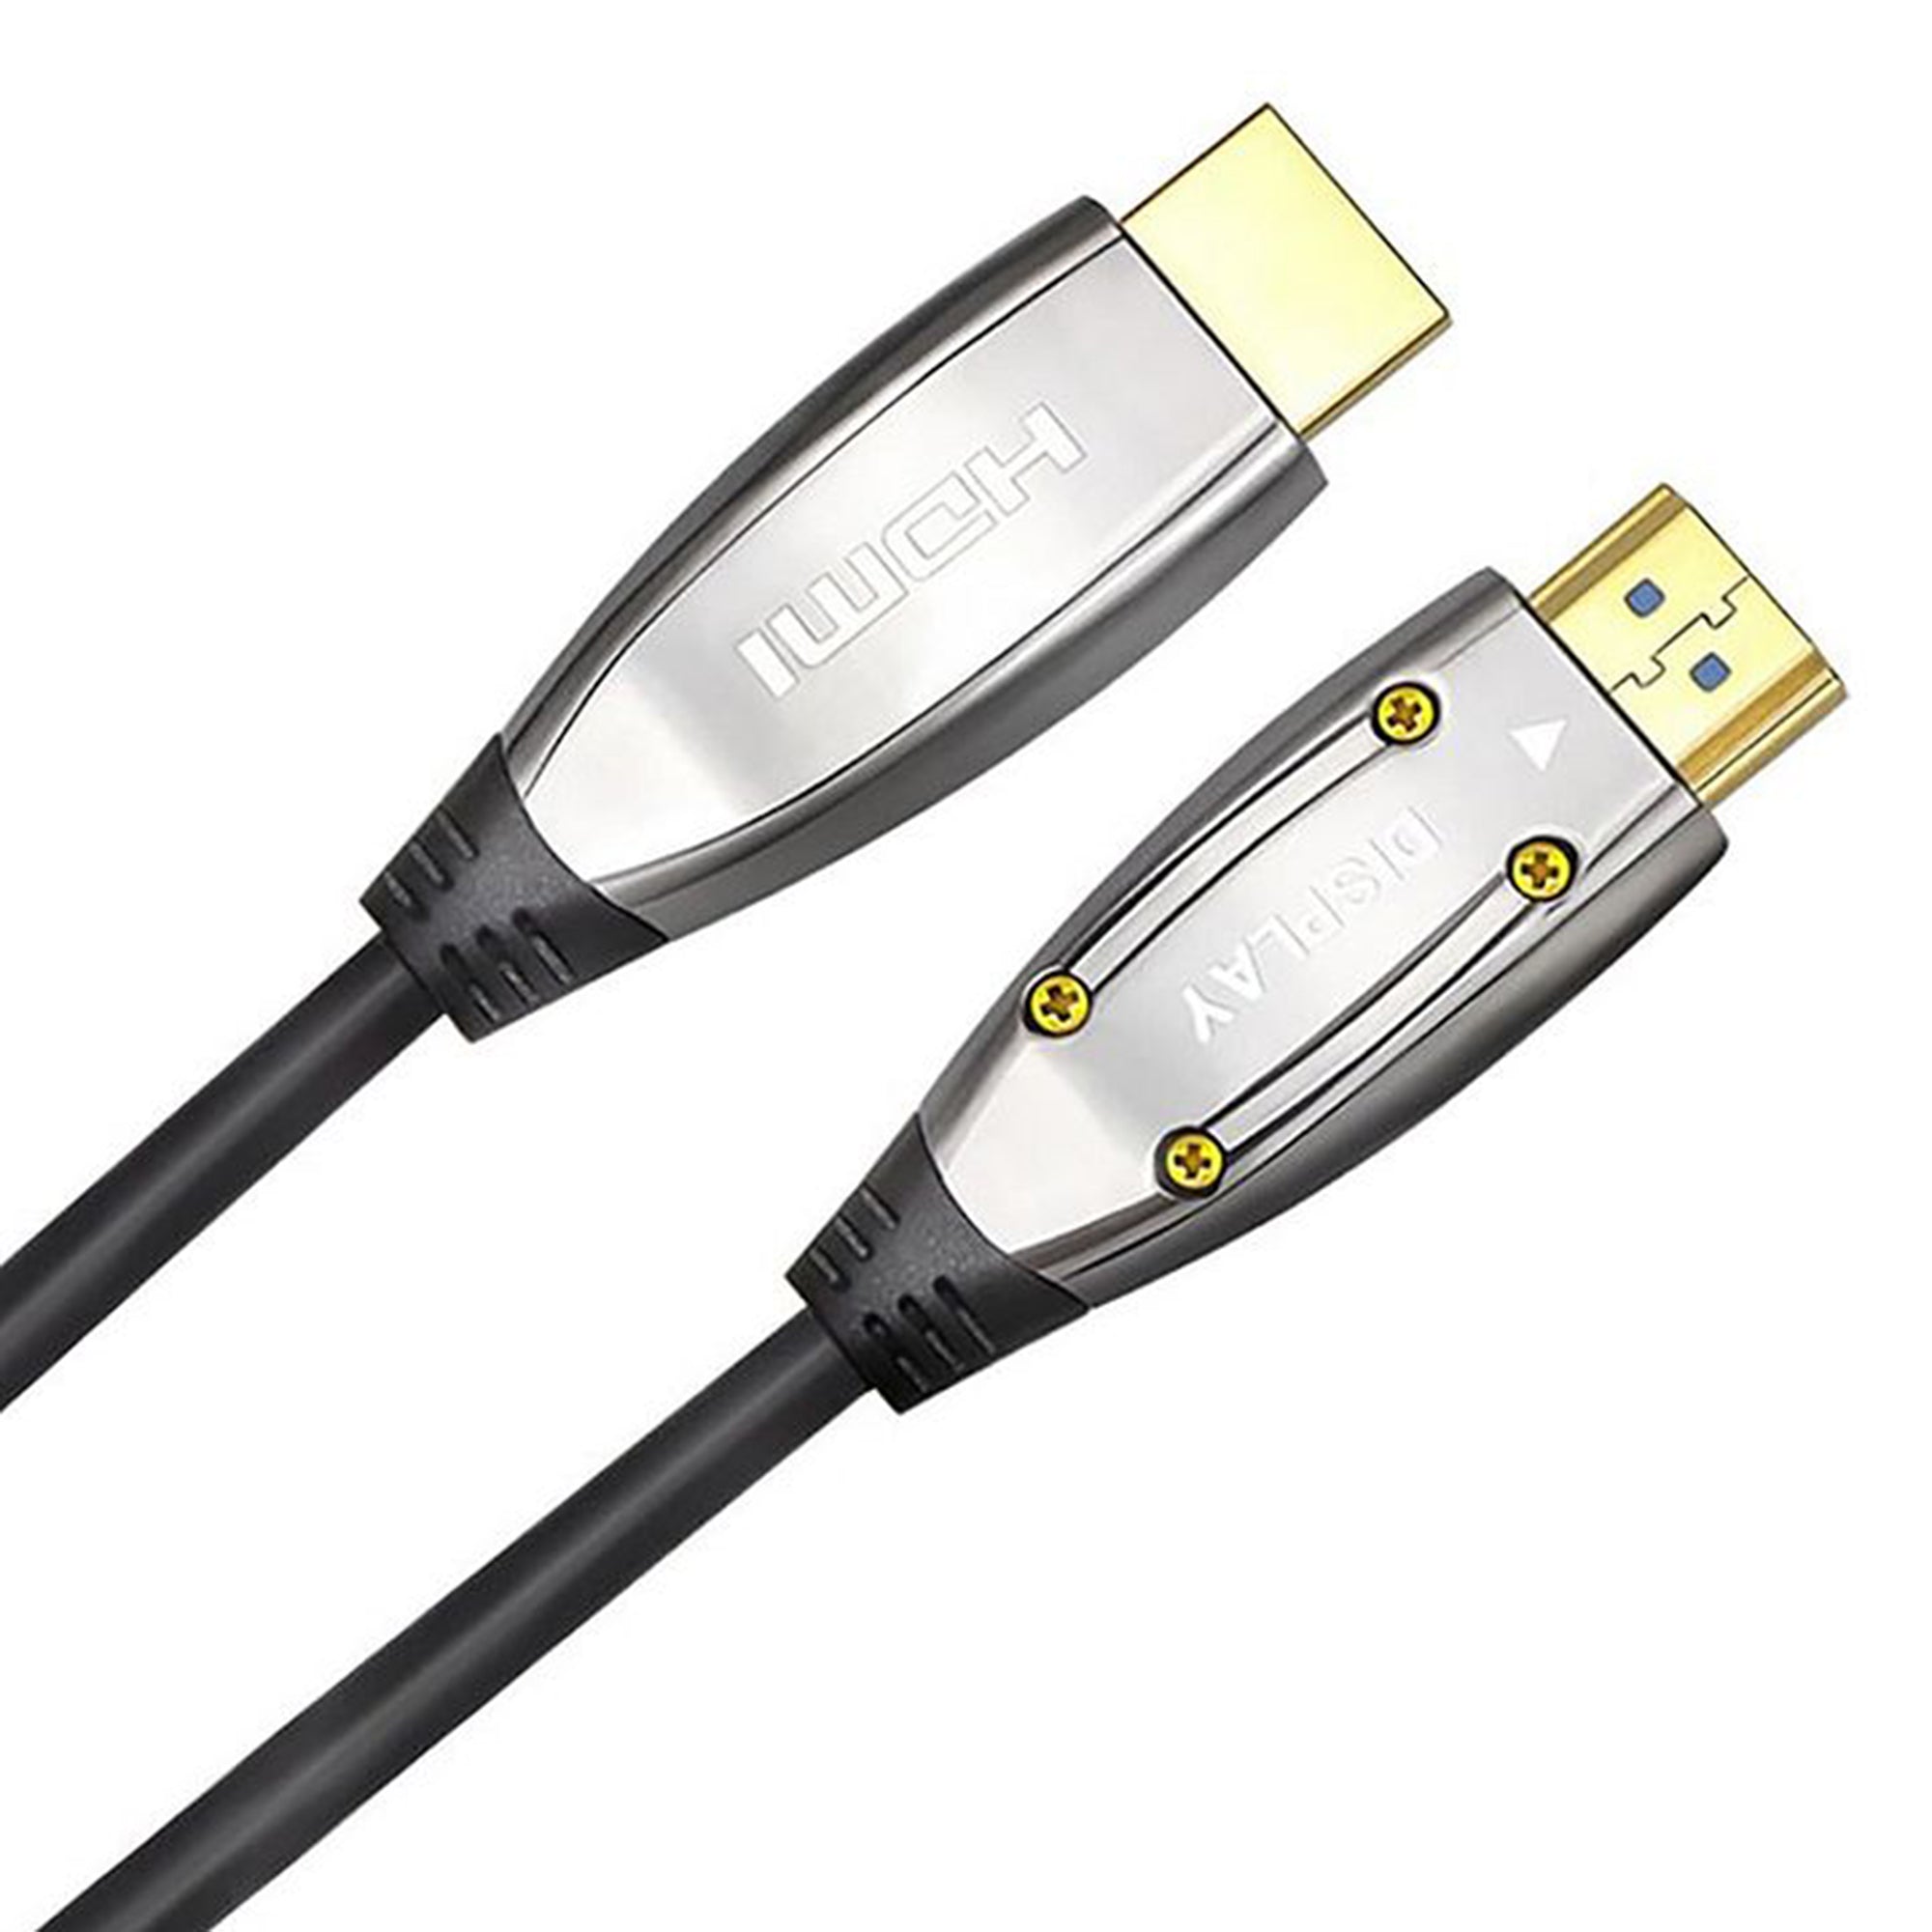 Cruxtec HS8K-20-SV Fibre Optical HDMI Cable, Silver (20 mtrs)